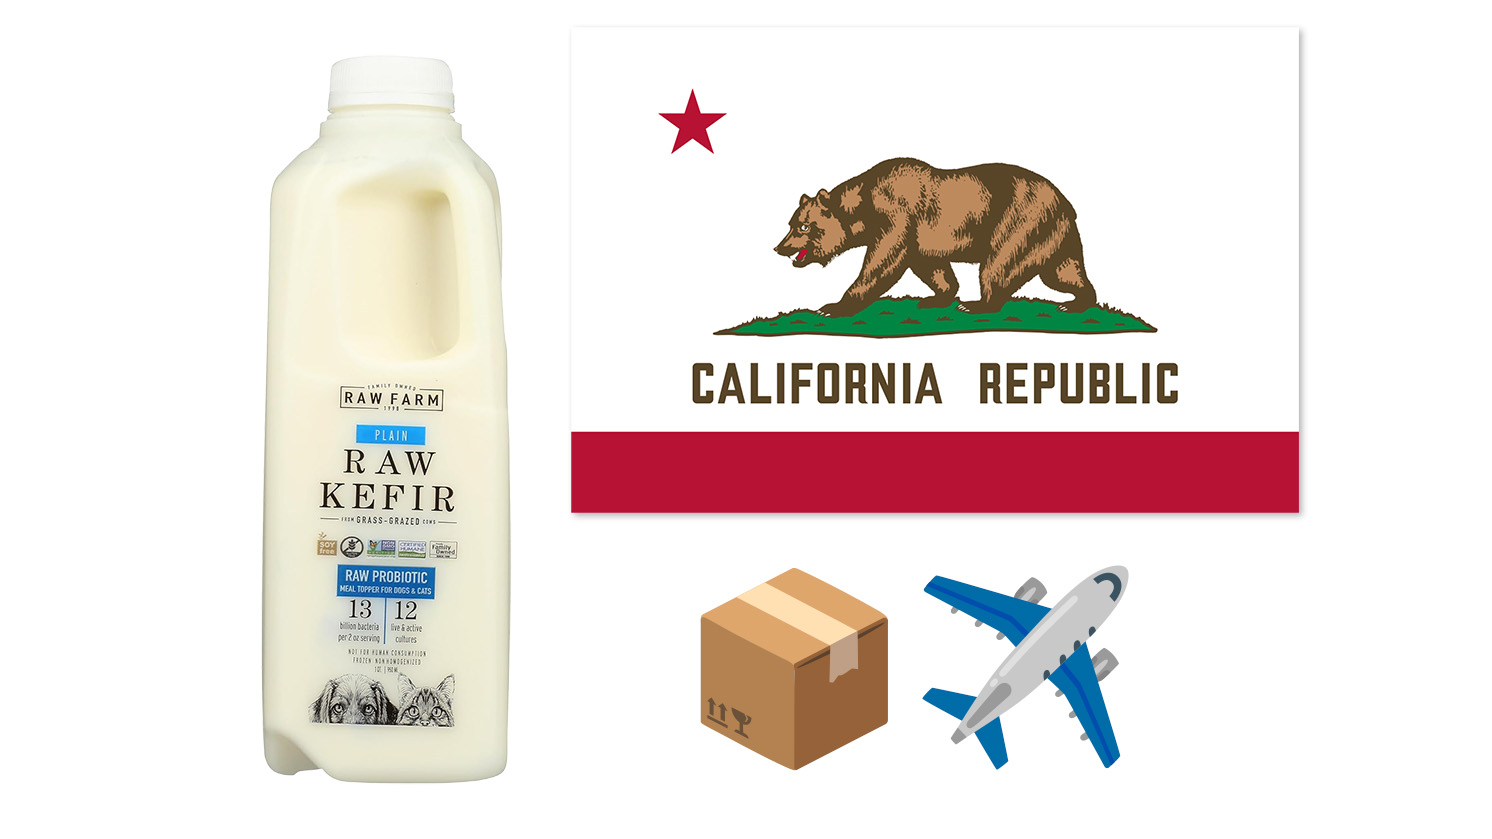 You can buy raw milk kefir on Amazon